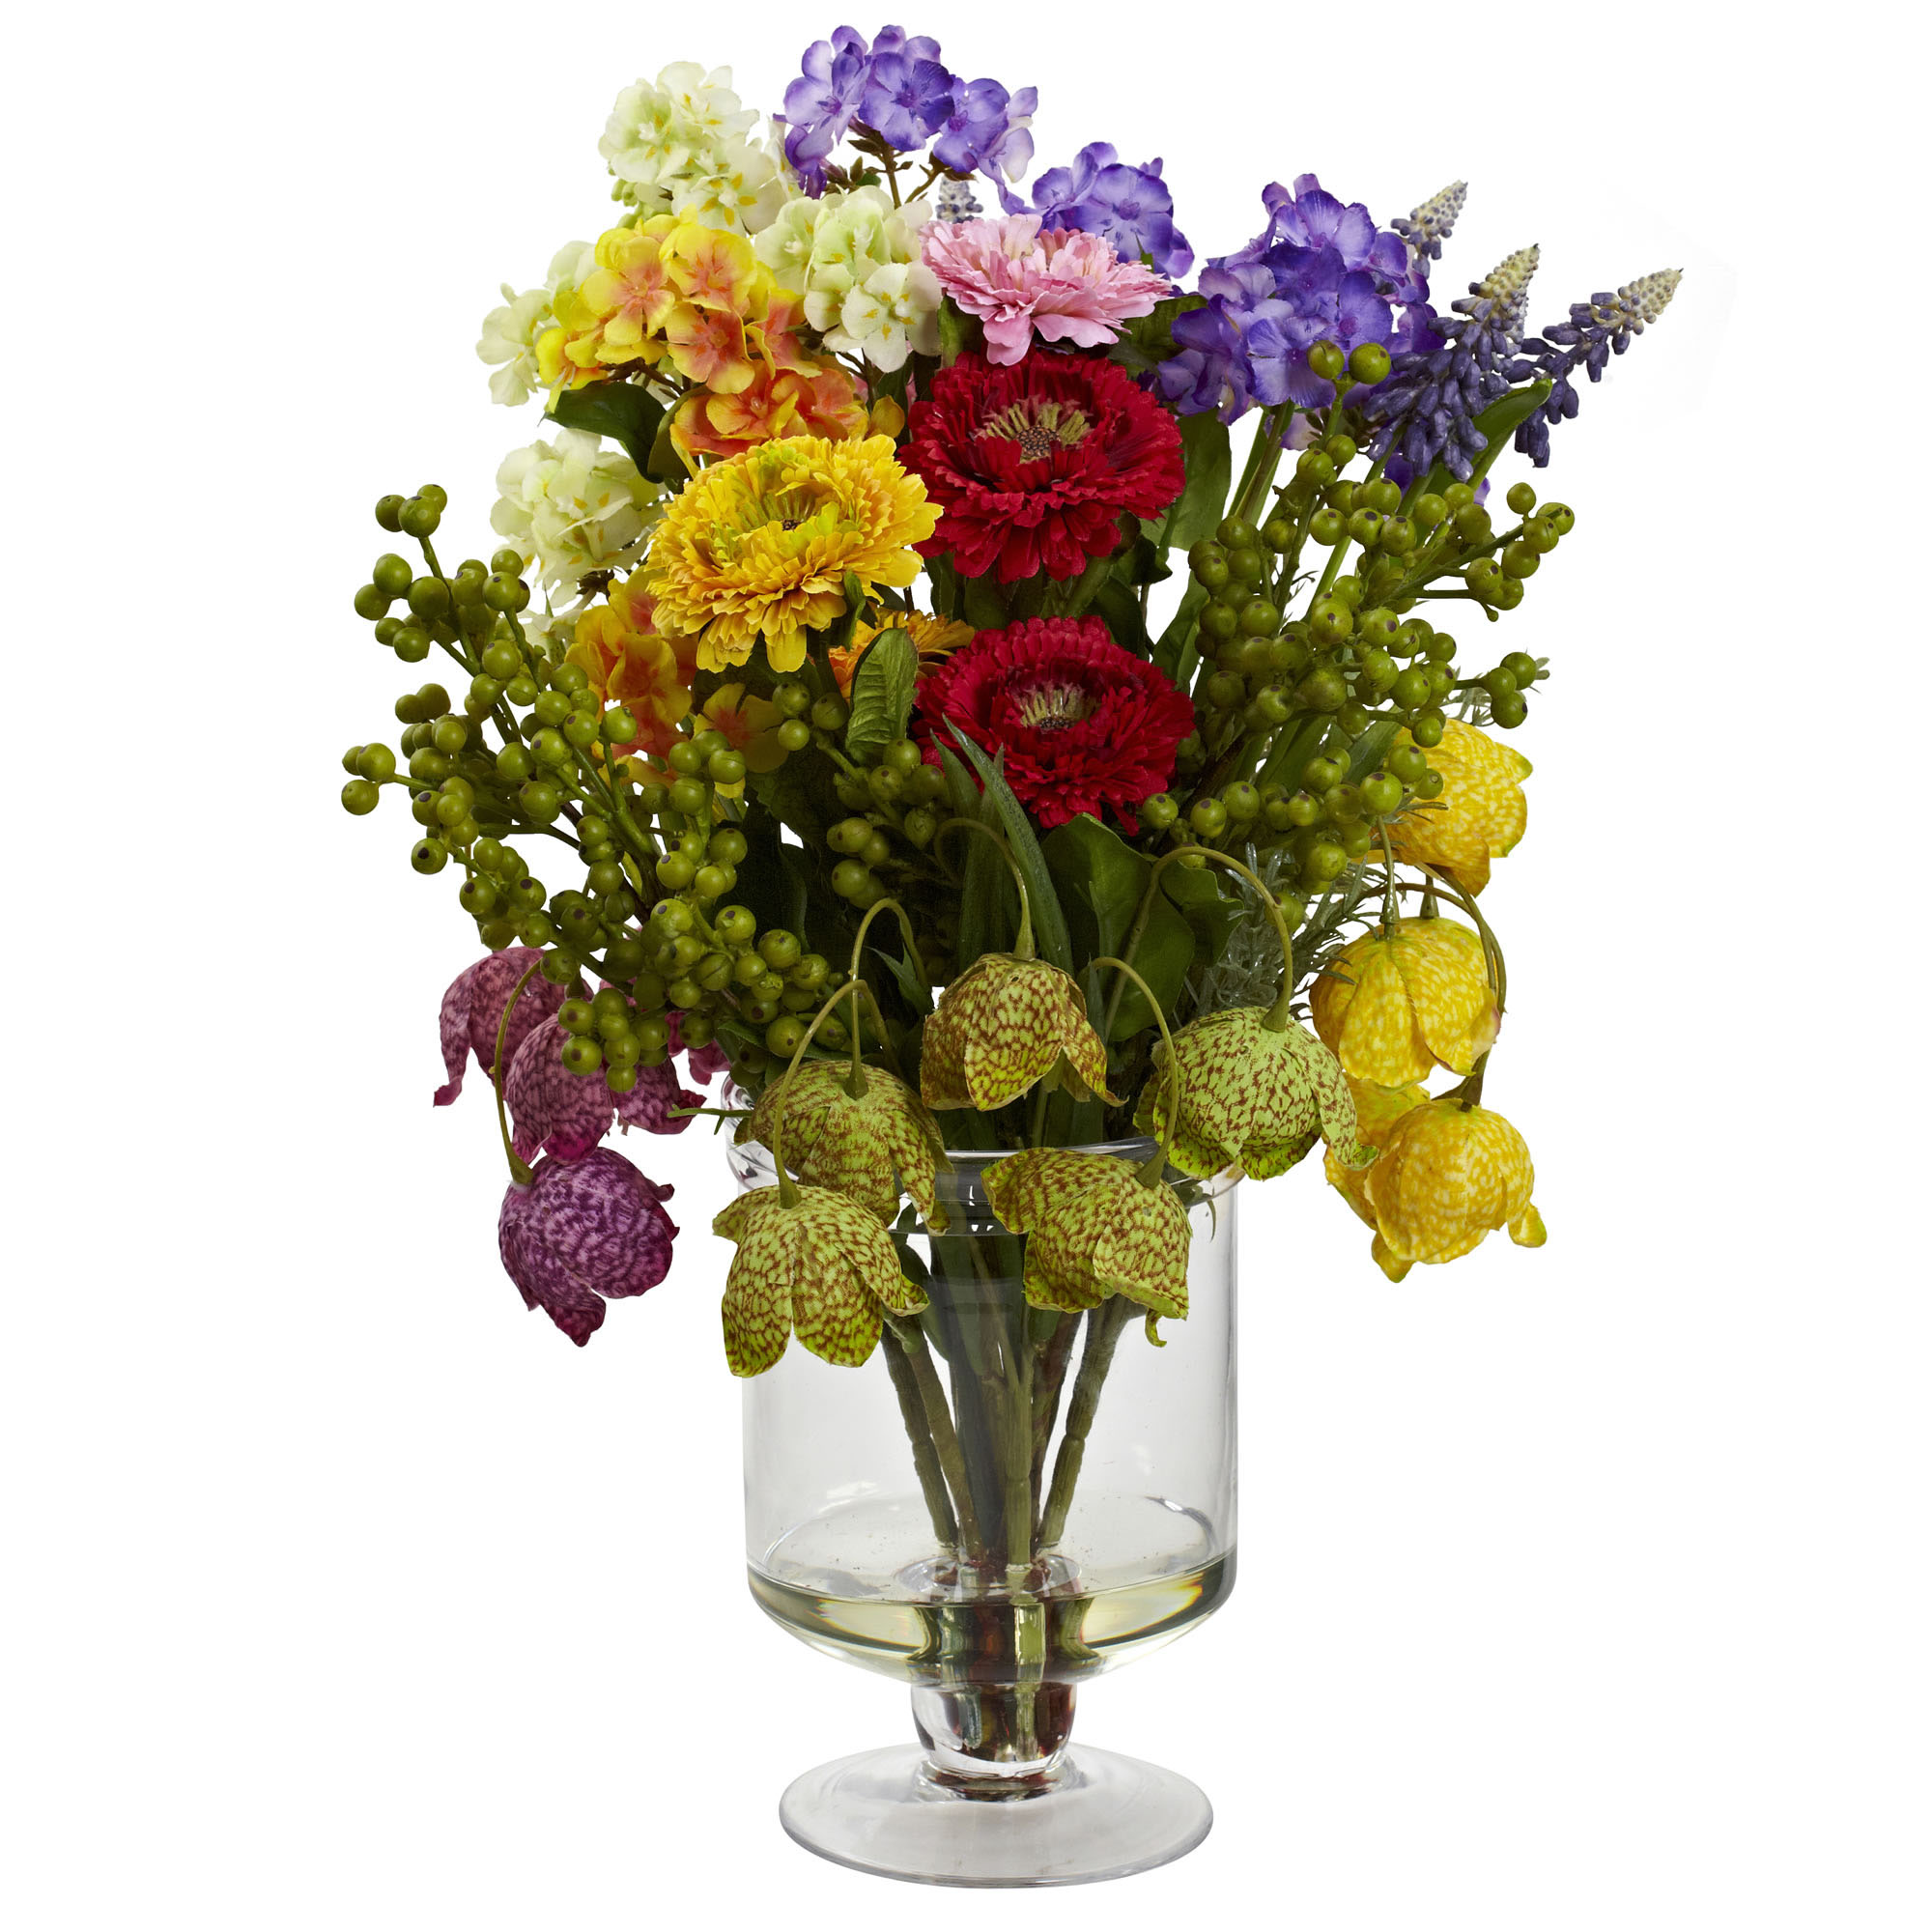 16 Inch Silk Indoor Spring Floral Arrangement In Decorative Glass Vase